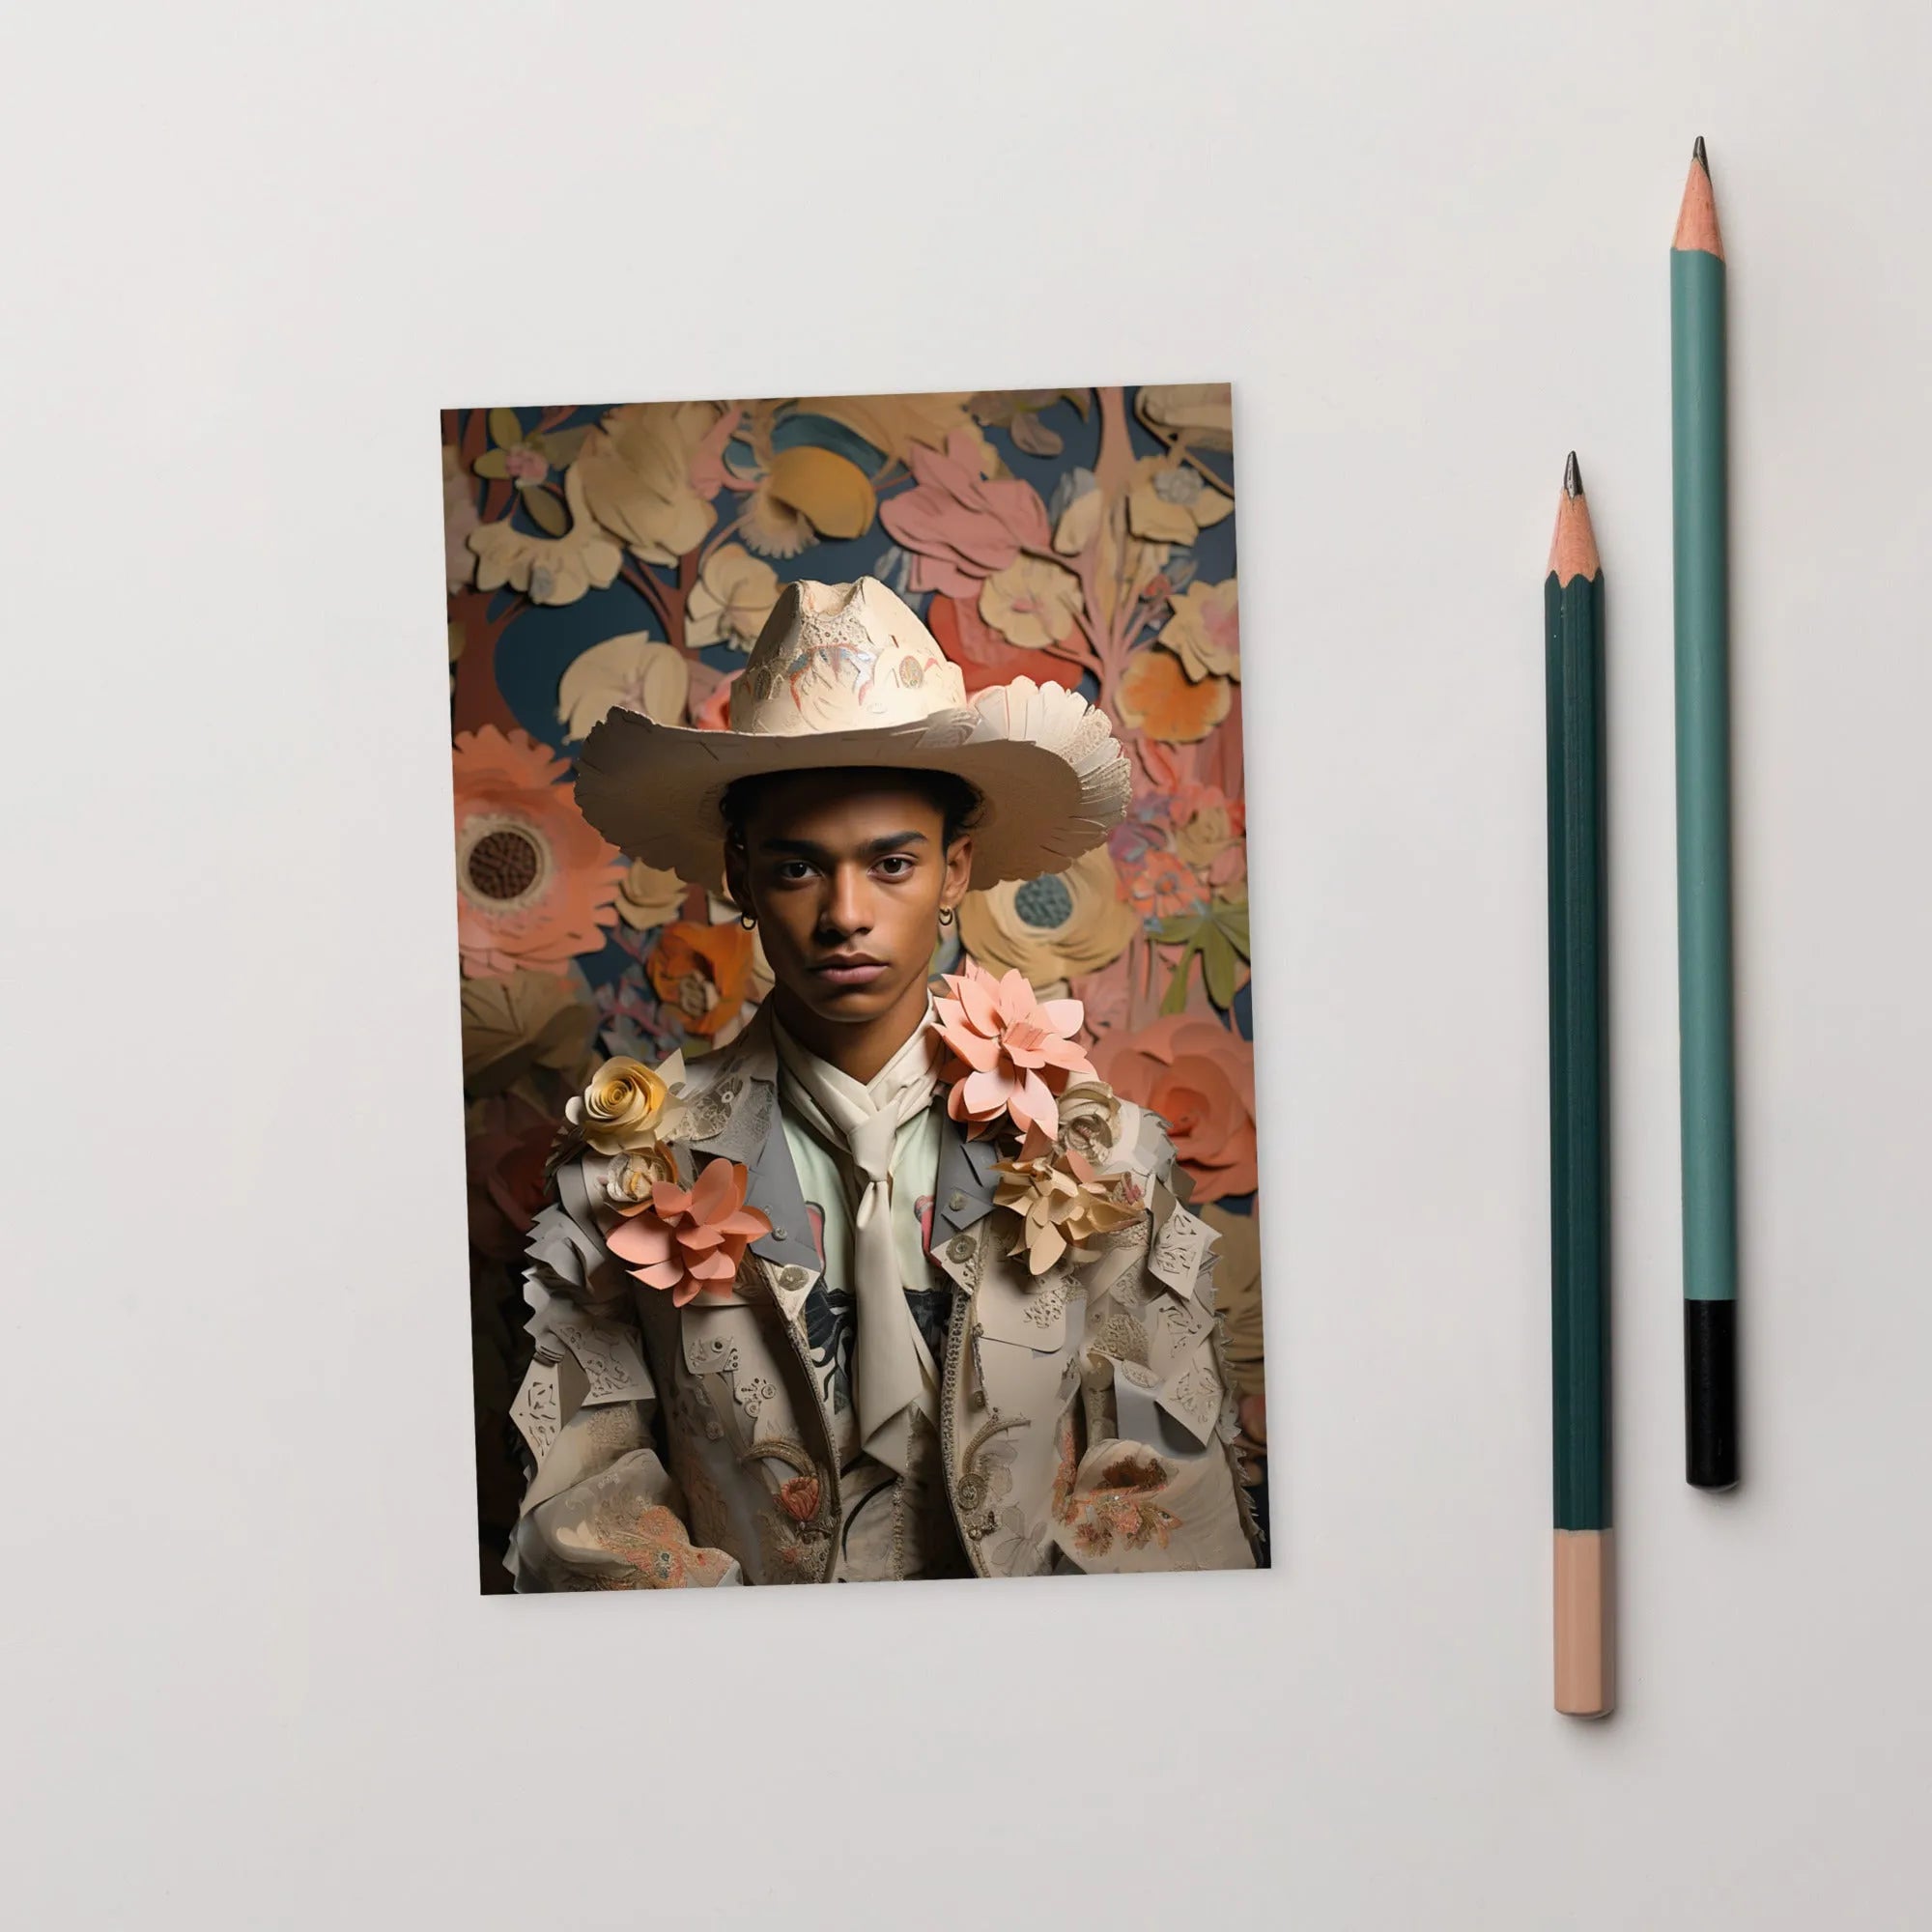 Presley - Gay Black Cowboy Art - Afroamerican Queerart Twunk - 4’x6’ - Posters Prints & Visual Artwork - Aesthetic Art